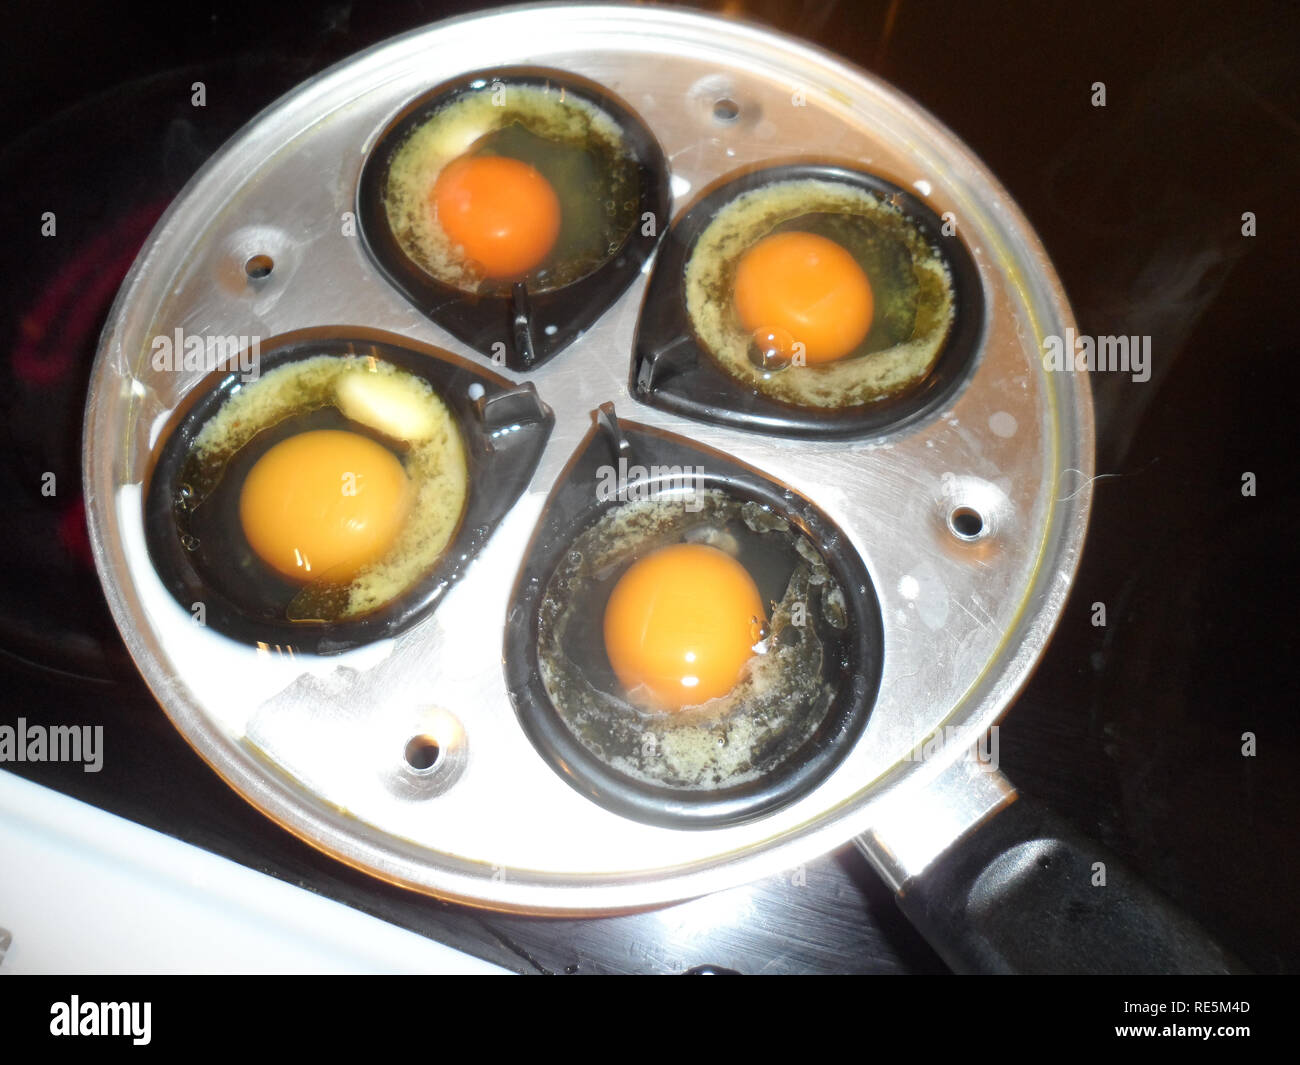 https://c8.alamy.com/comp/RE5M4D/poaching-eggs-in-a-mass-produced-egg-poaching-pan-RE5M4D.jpg